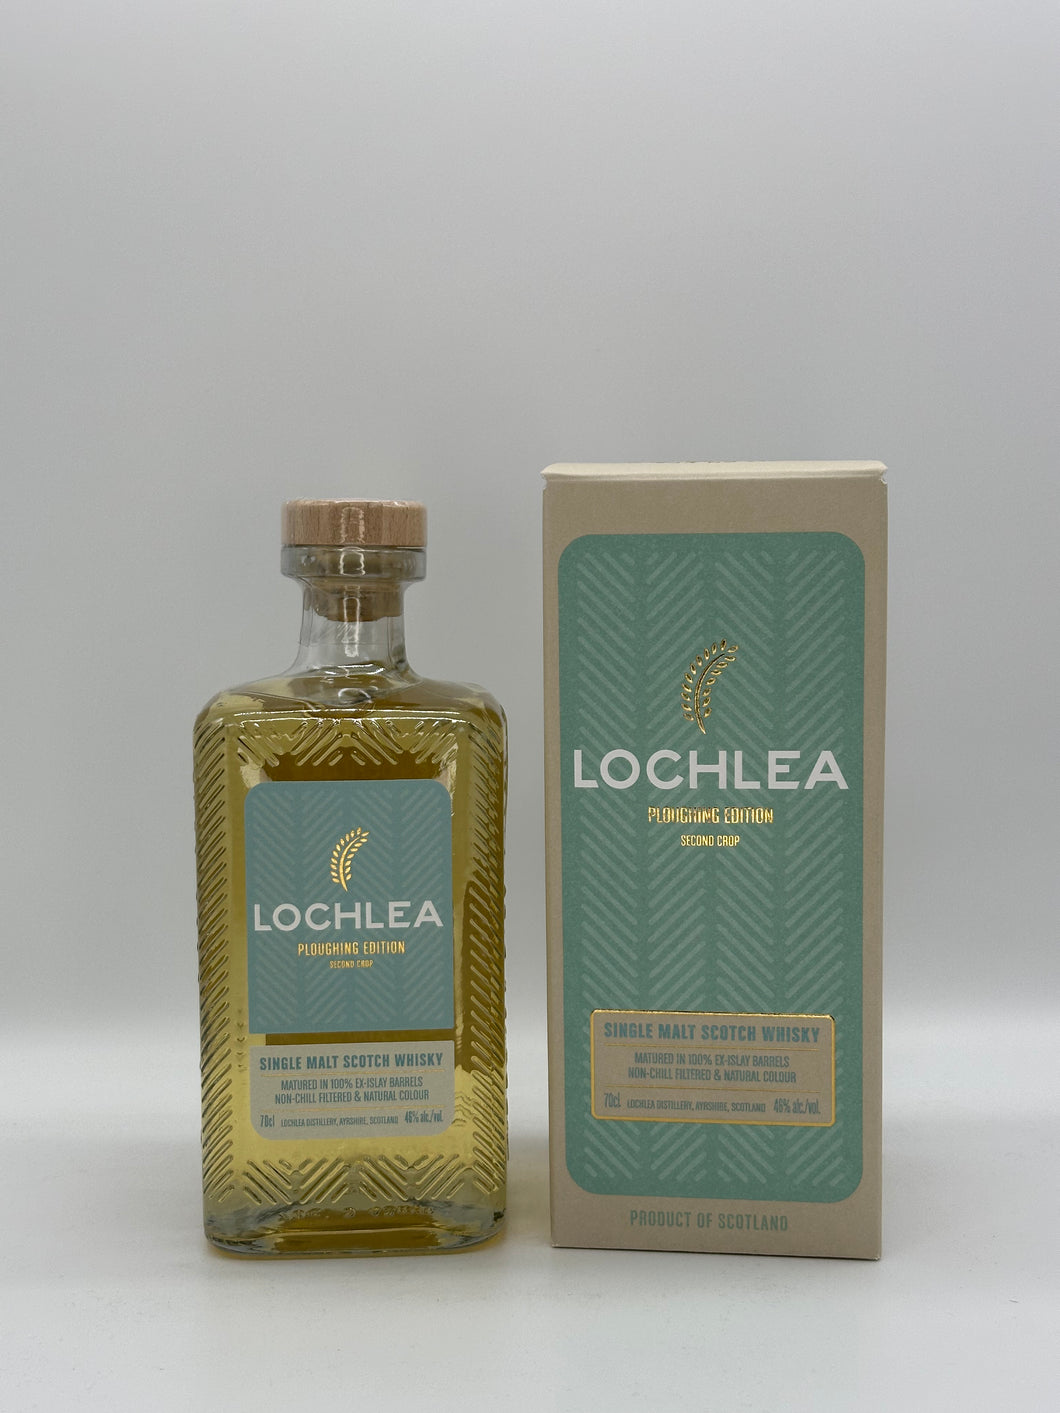 Lochlea Ploughing Edition Second Crop Single Malt Scotch Whisky Lowland 46%vol. 0,7l